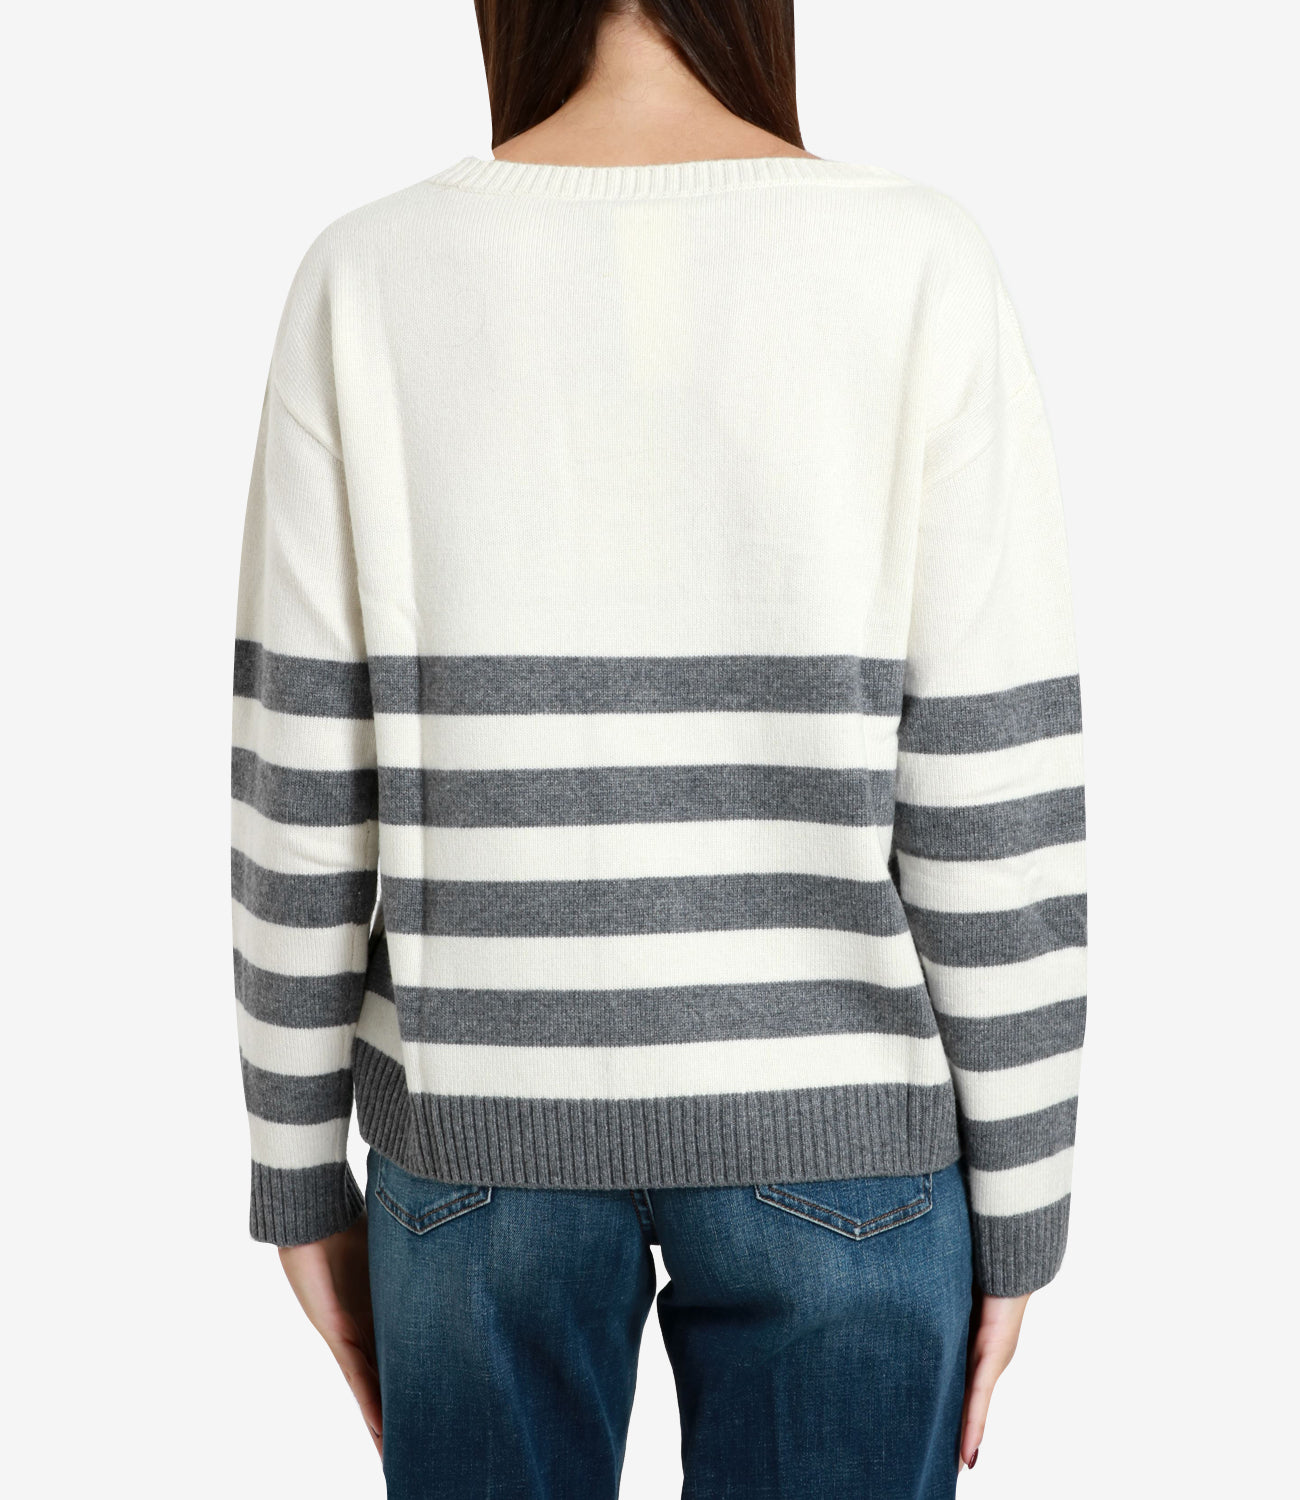 Pennyblack | Cream and Gray Sweater